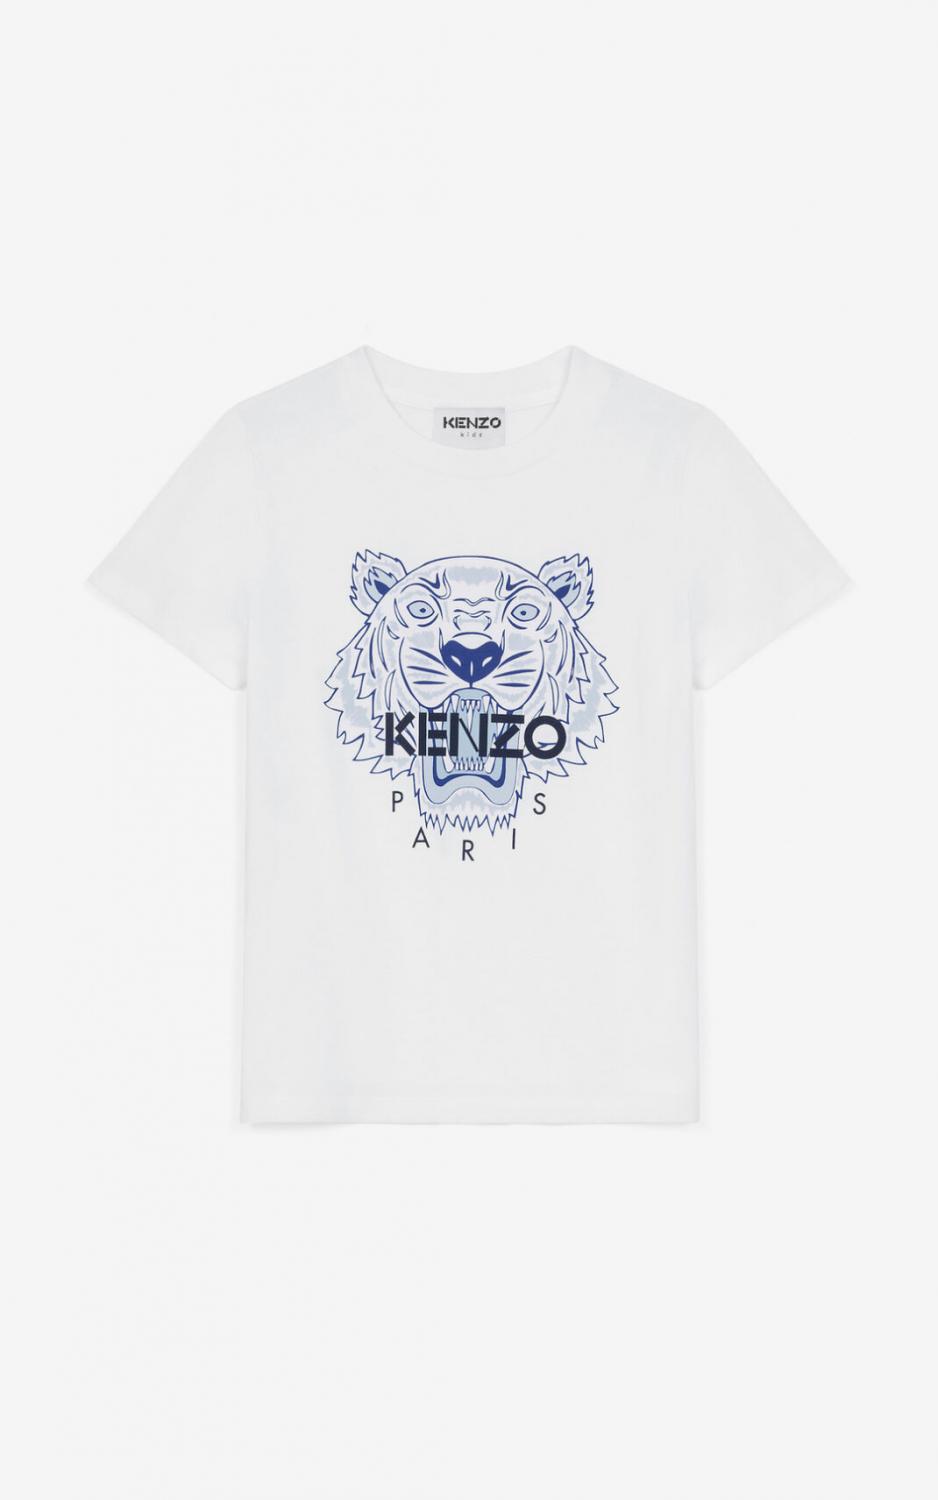 KENZO T-SHIRT K25170 TIGER WHITE